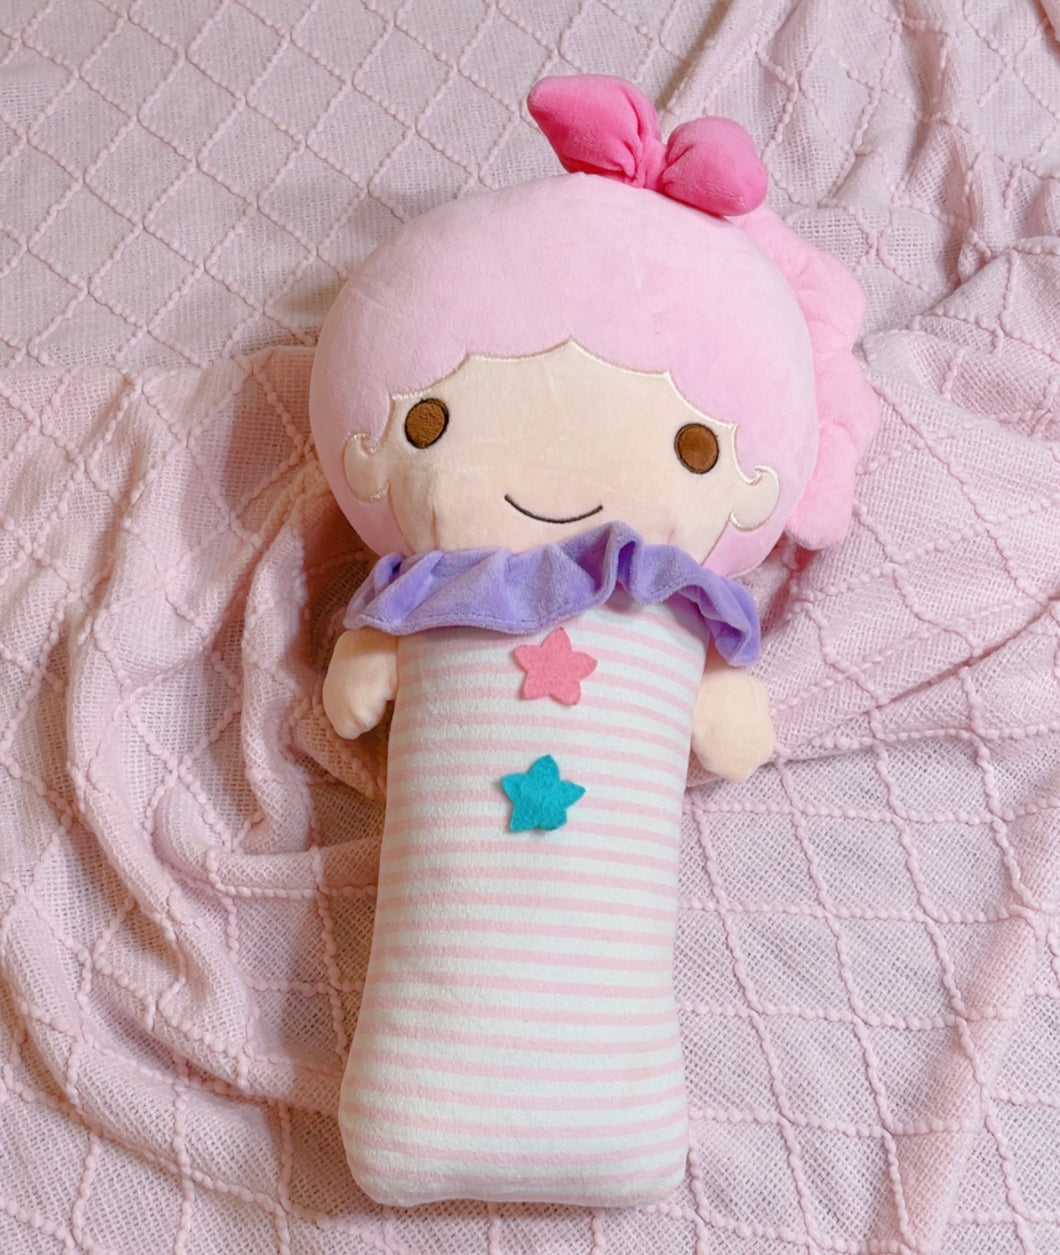 Sanrio My Little Twin Stars large plush toy - 20” long!